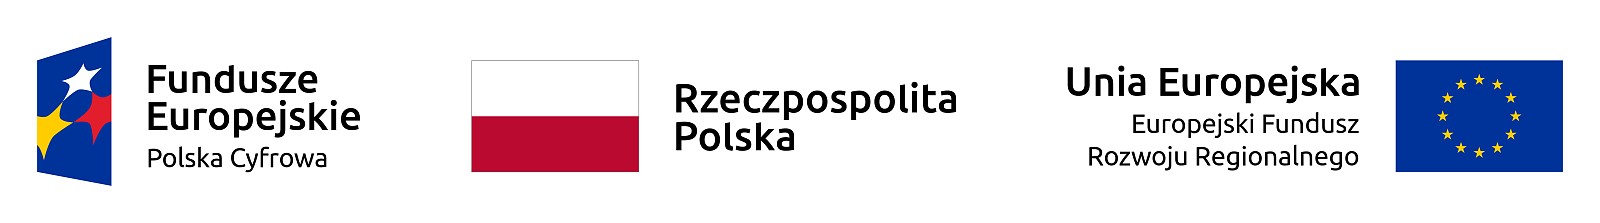 logotyp polska cyf.jpg [559.67 KB]